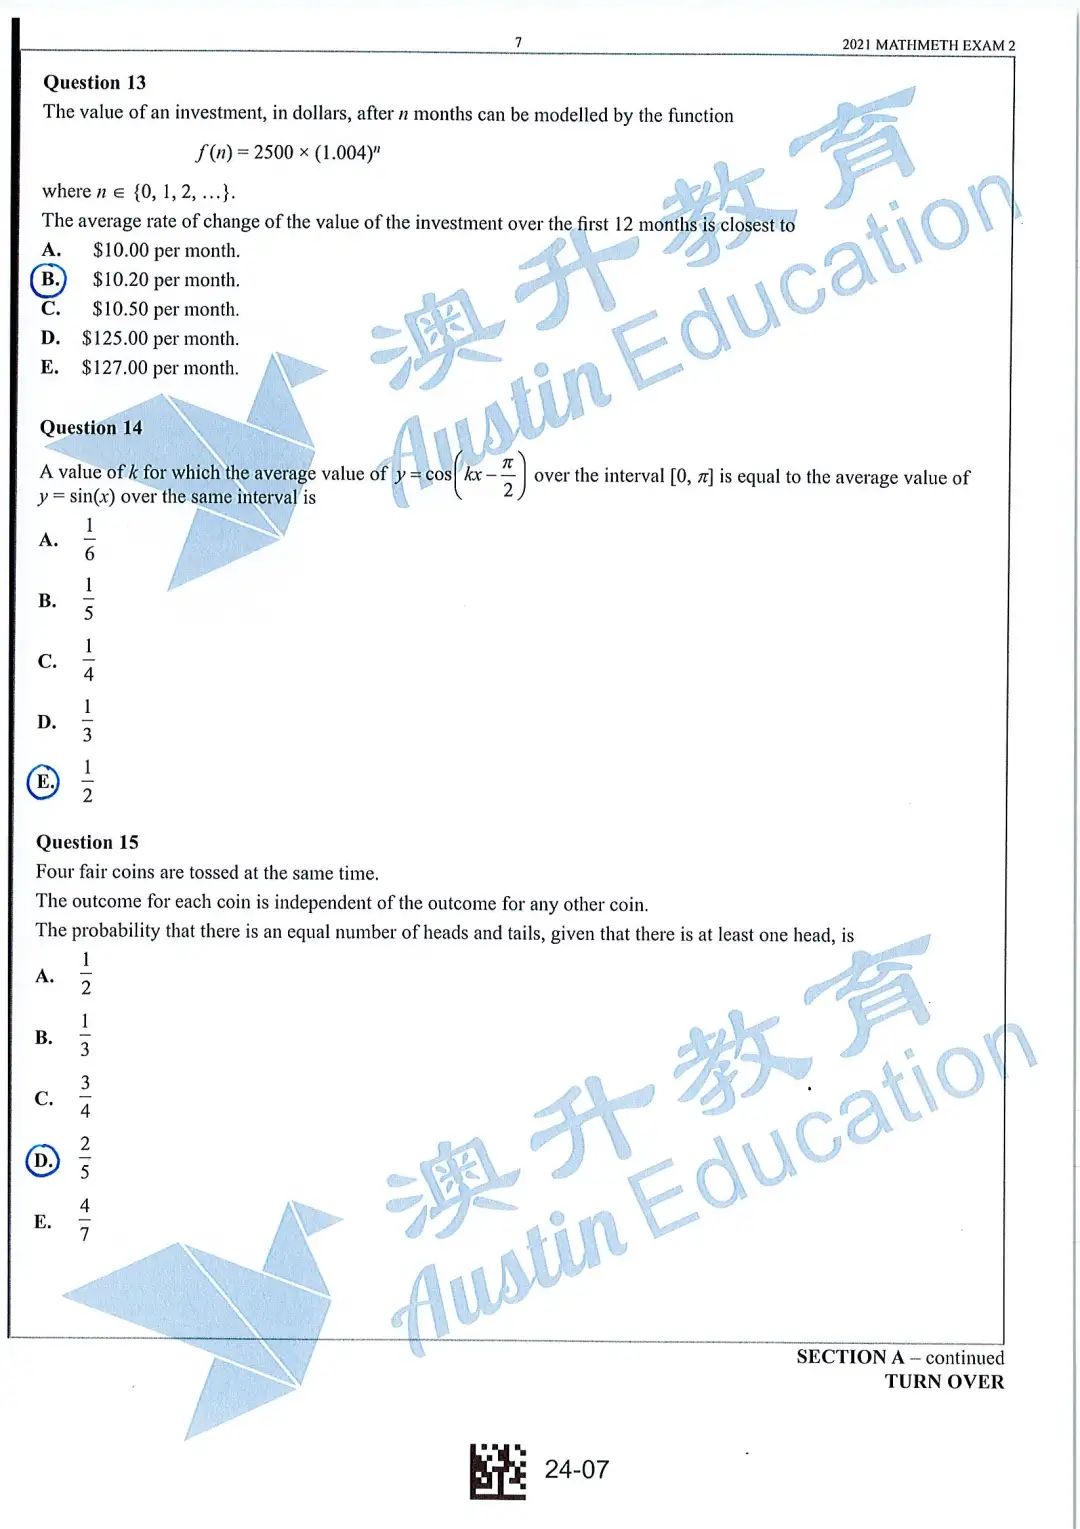 vce exam timetable 2021 - Austin Education 06